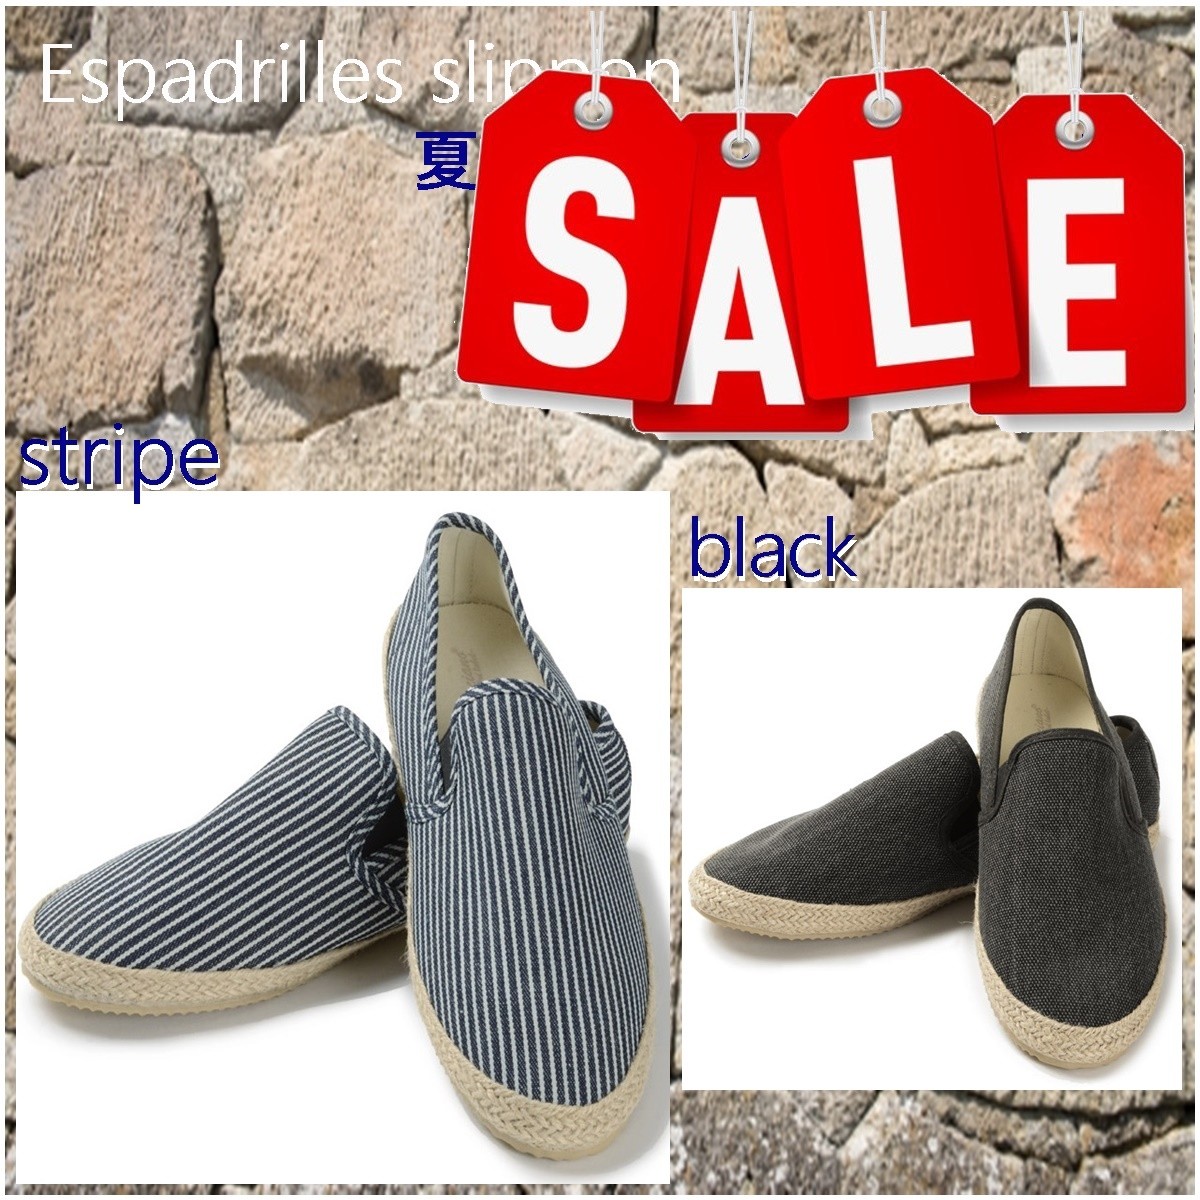  espadrille black stripe men's shoes free shipping sale 